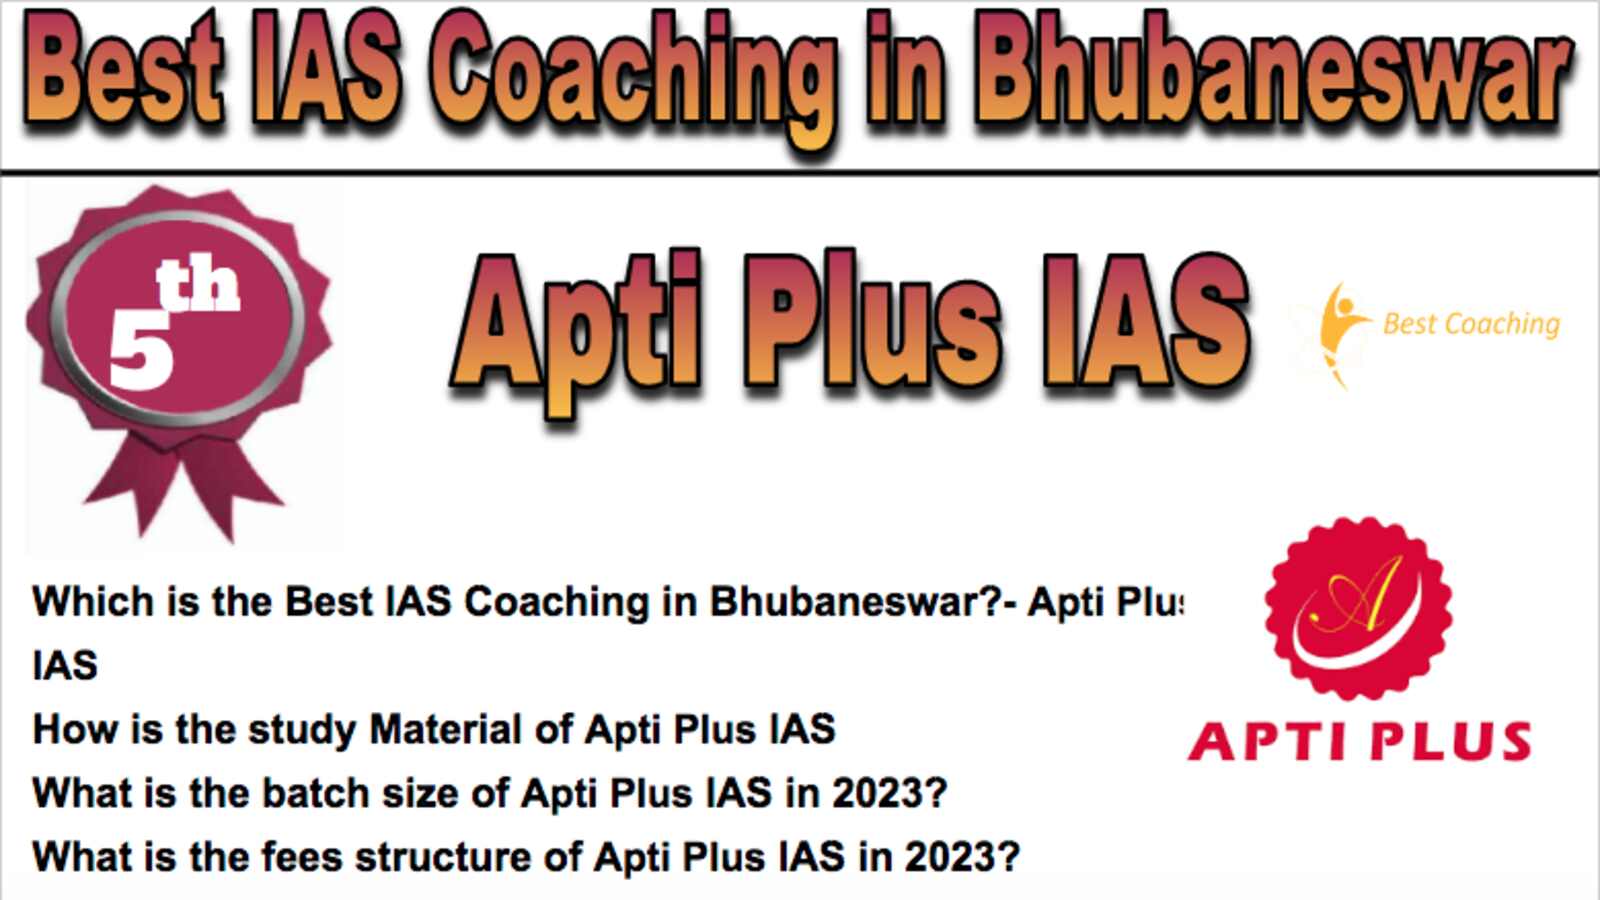 5th Best IAS Coaching in Bhubaneswar 2023